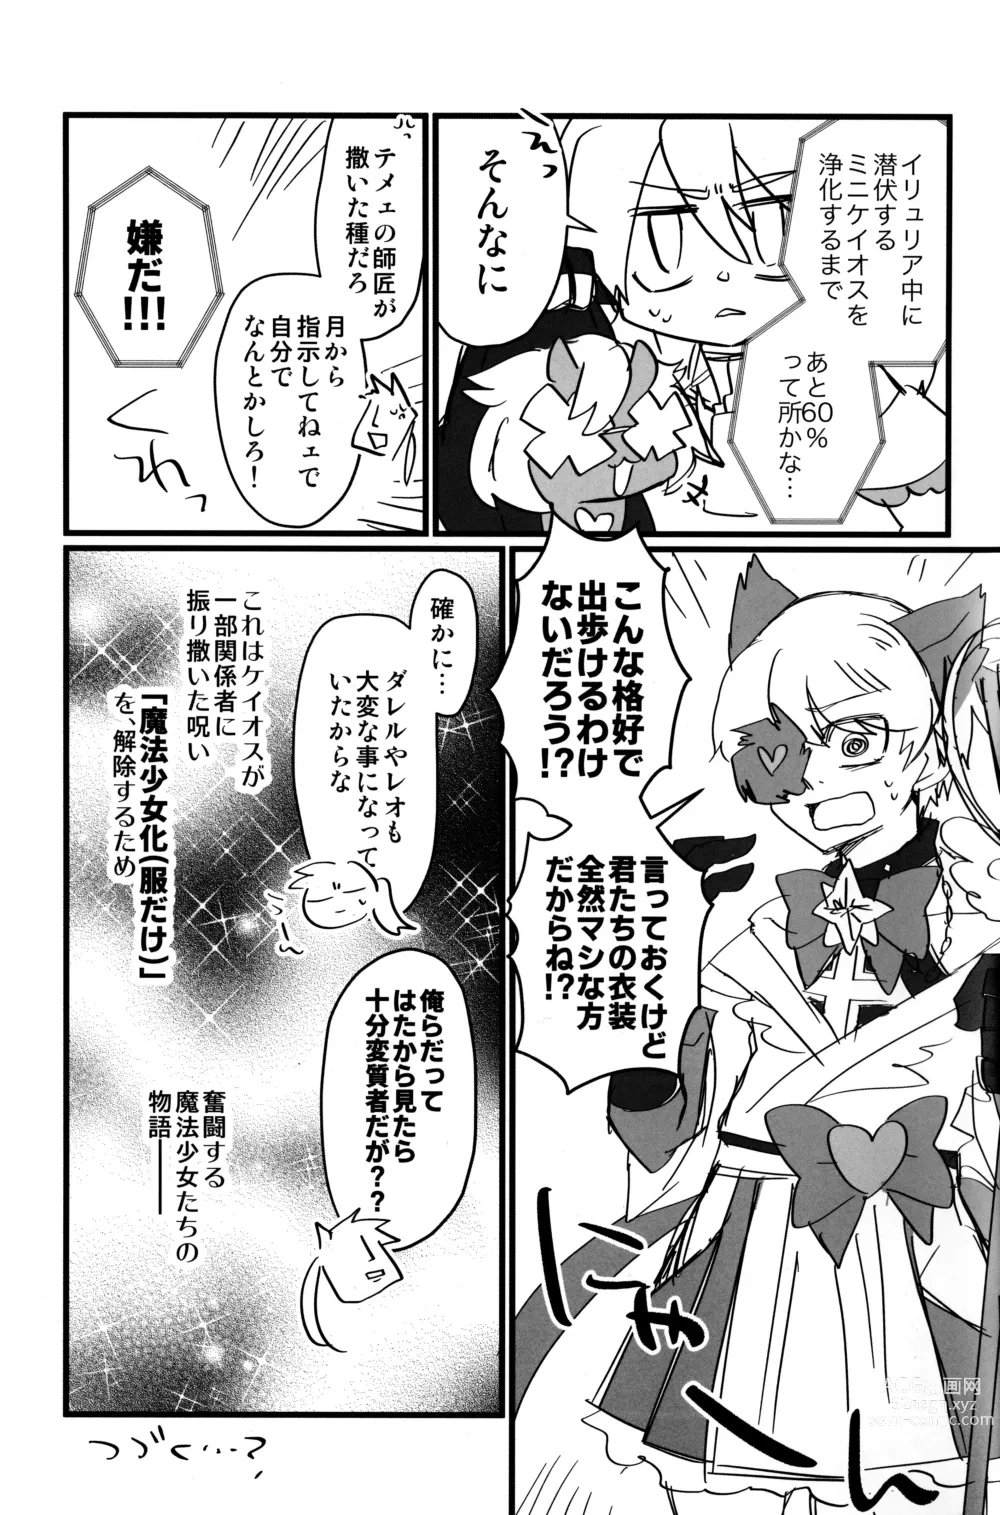 Page 19 of doujinshi Iron na  Futari